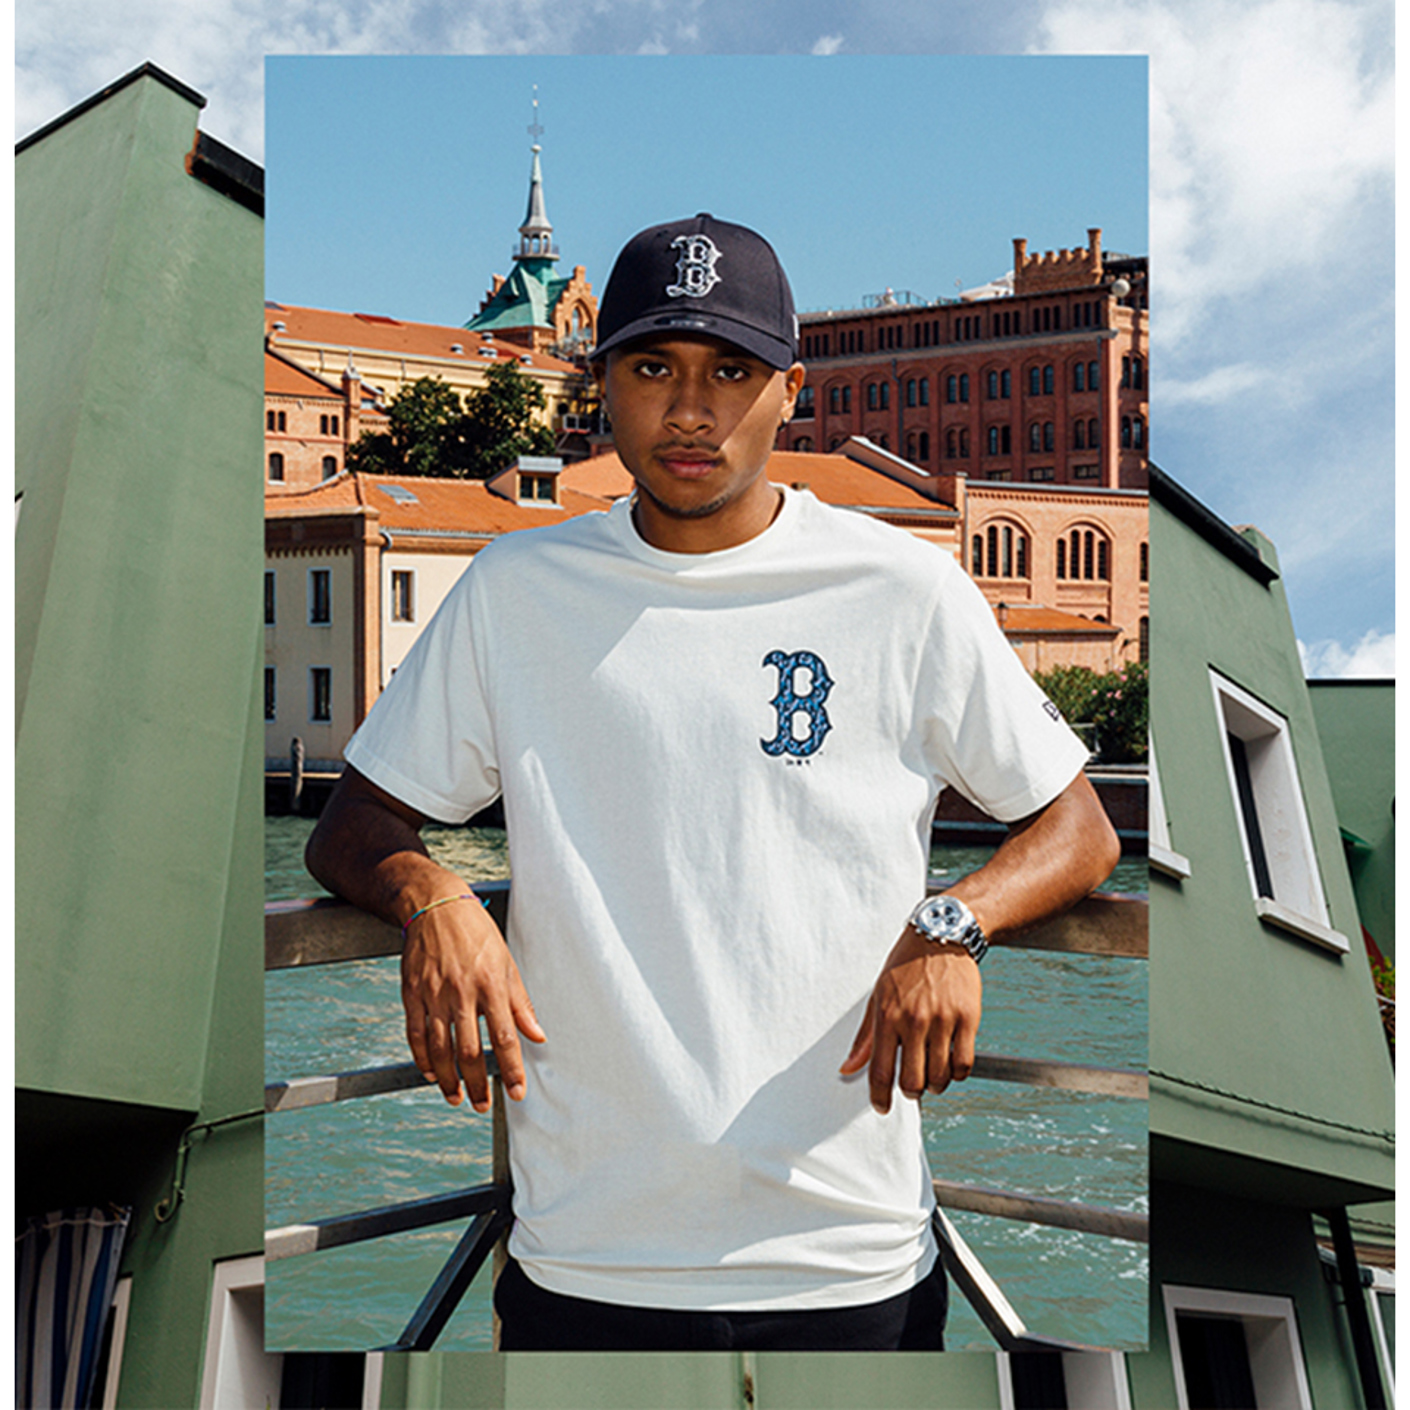 New Era Boston Red Sox cap and t-shirt